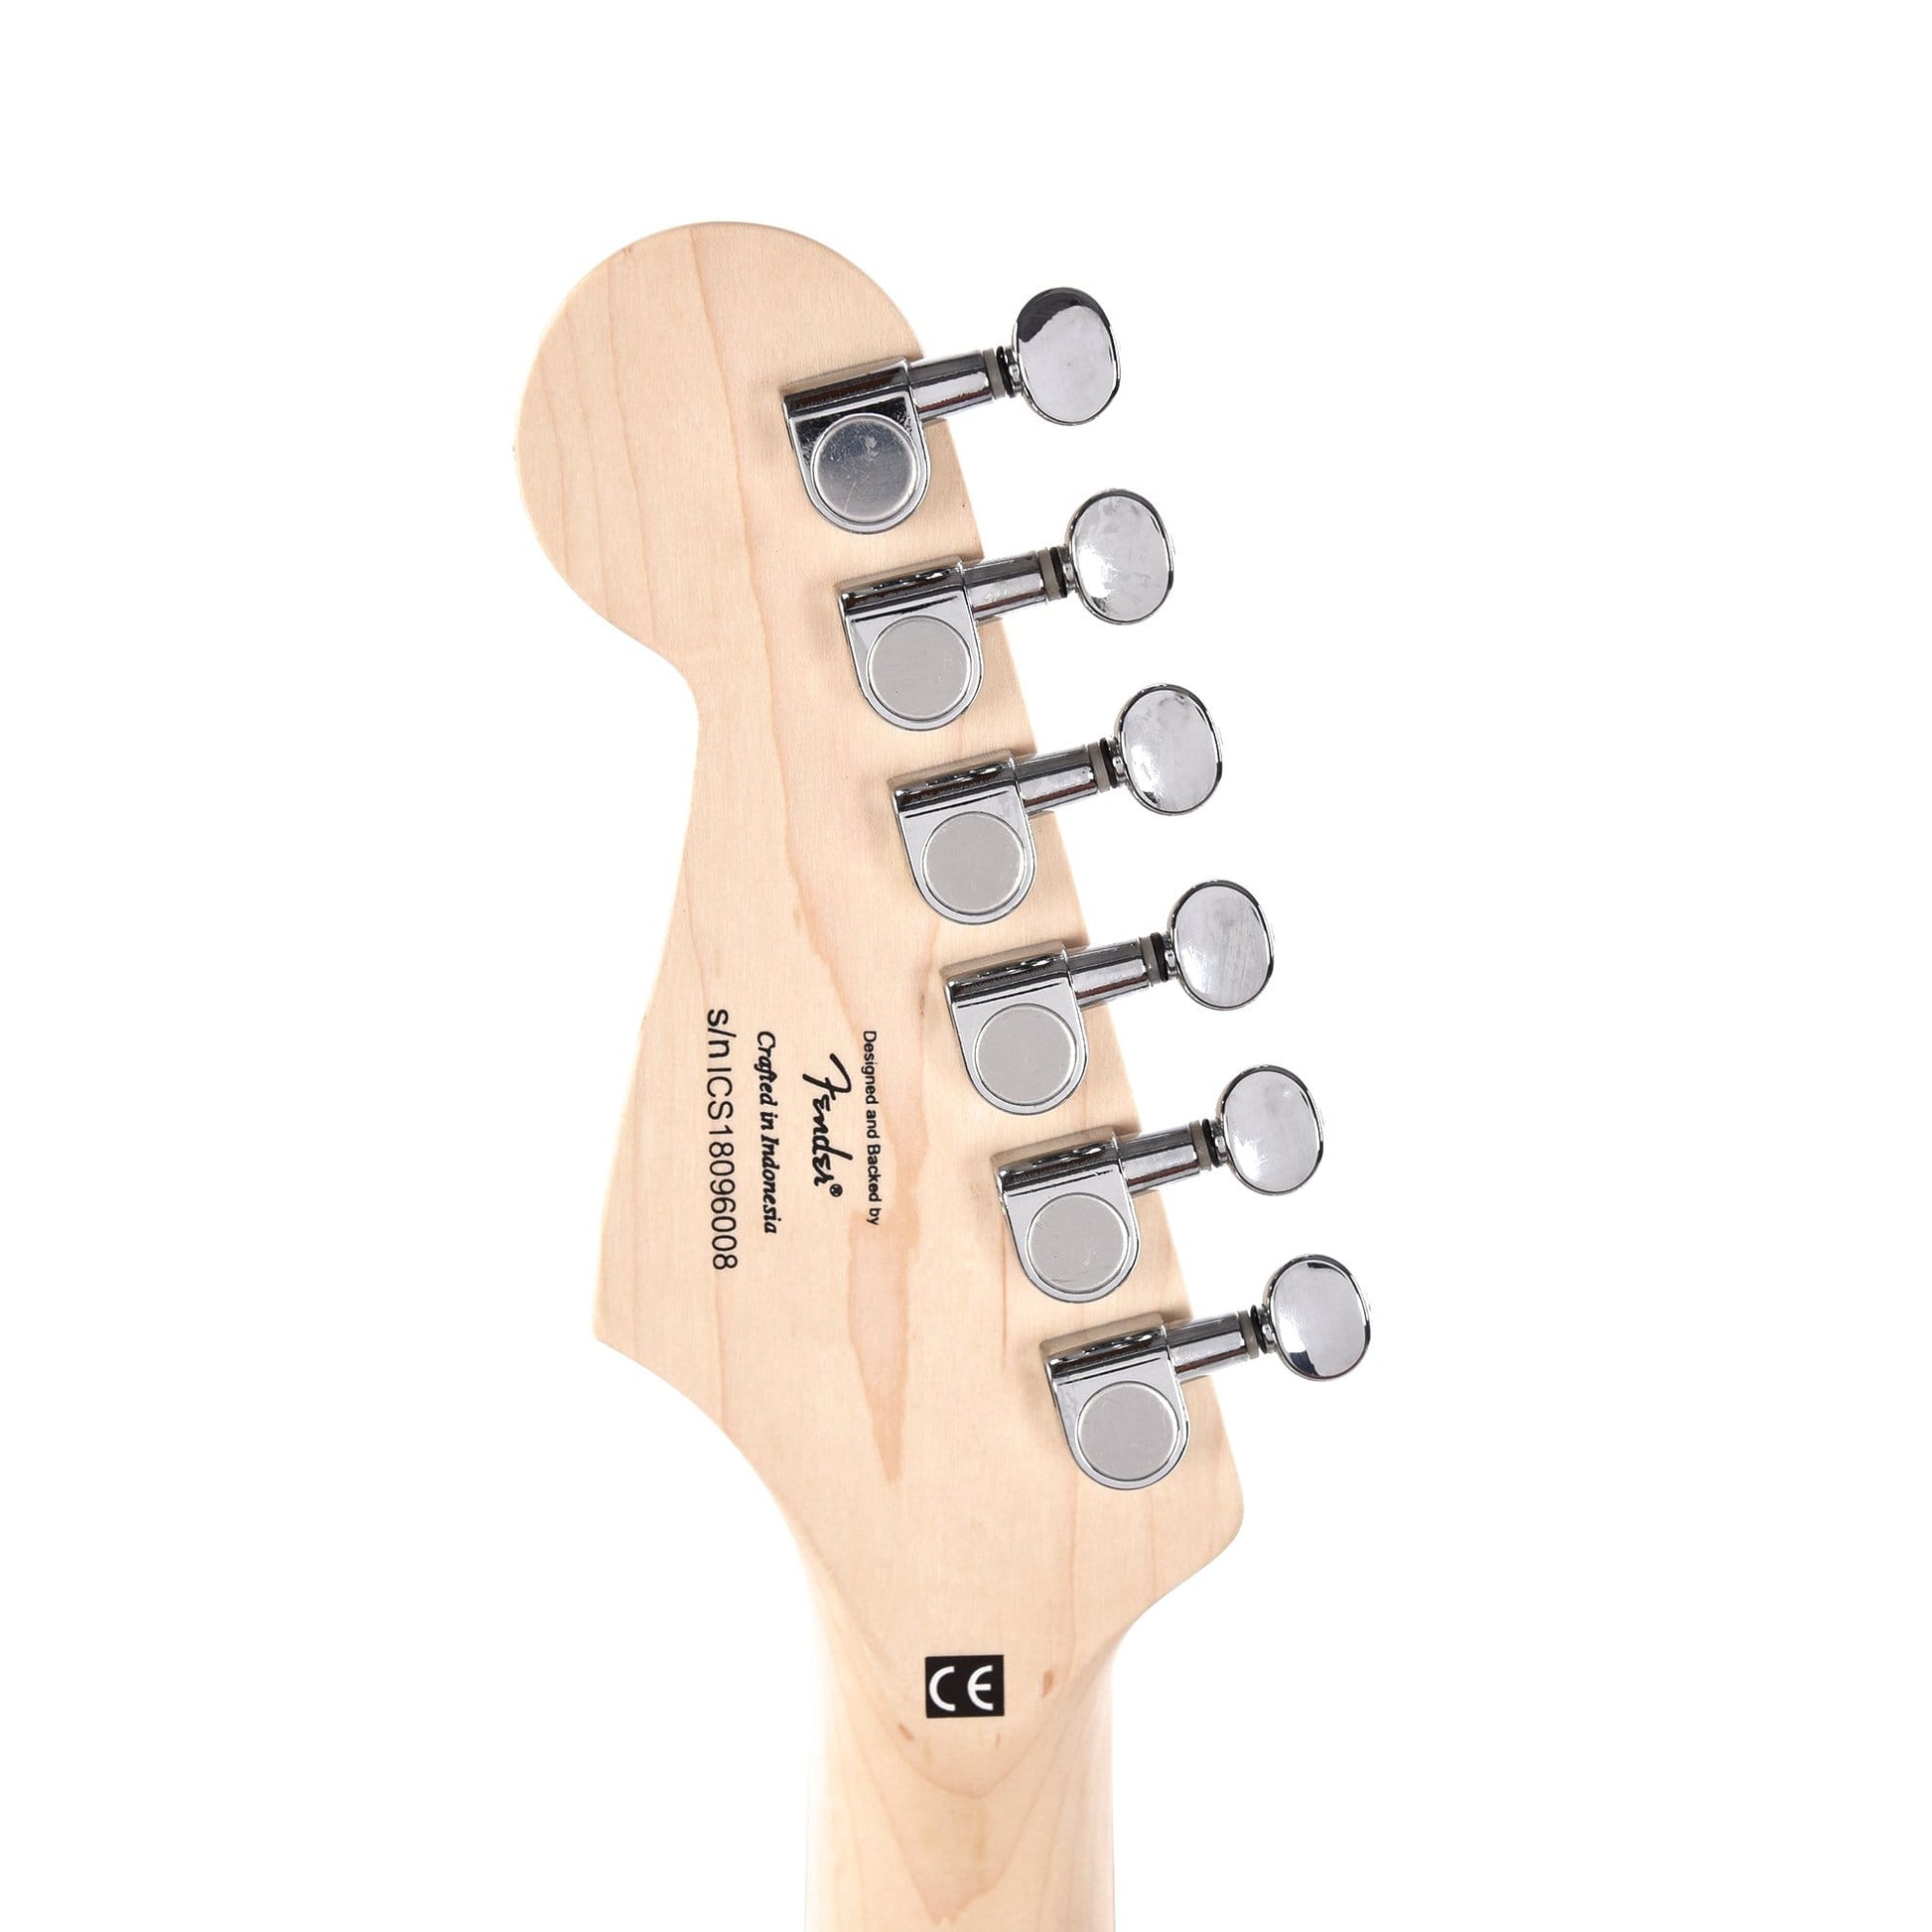 Squier Mini Stratocaster V2 Black Electric Guitars / Travel / Mini